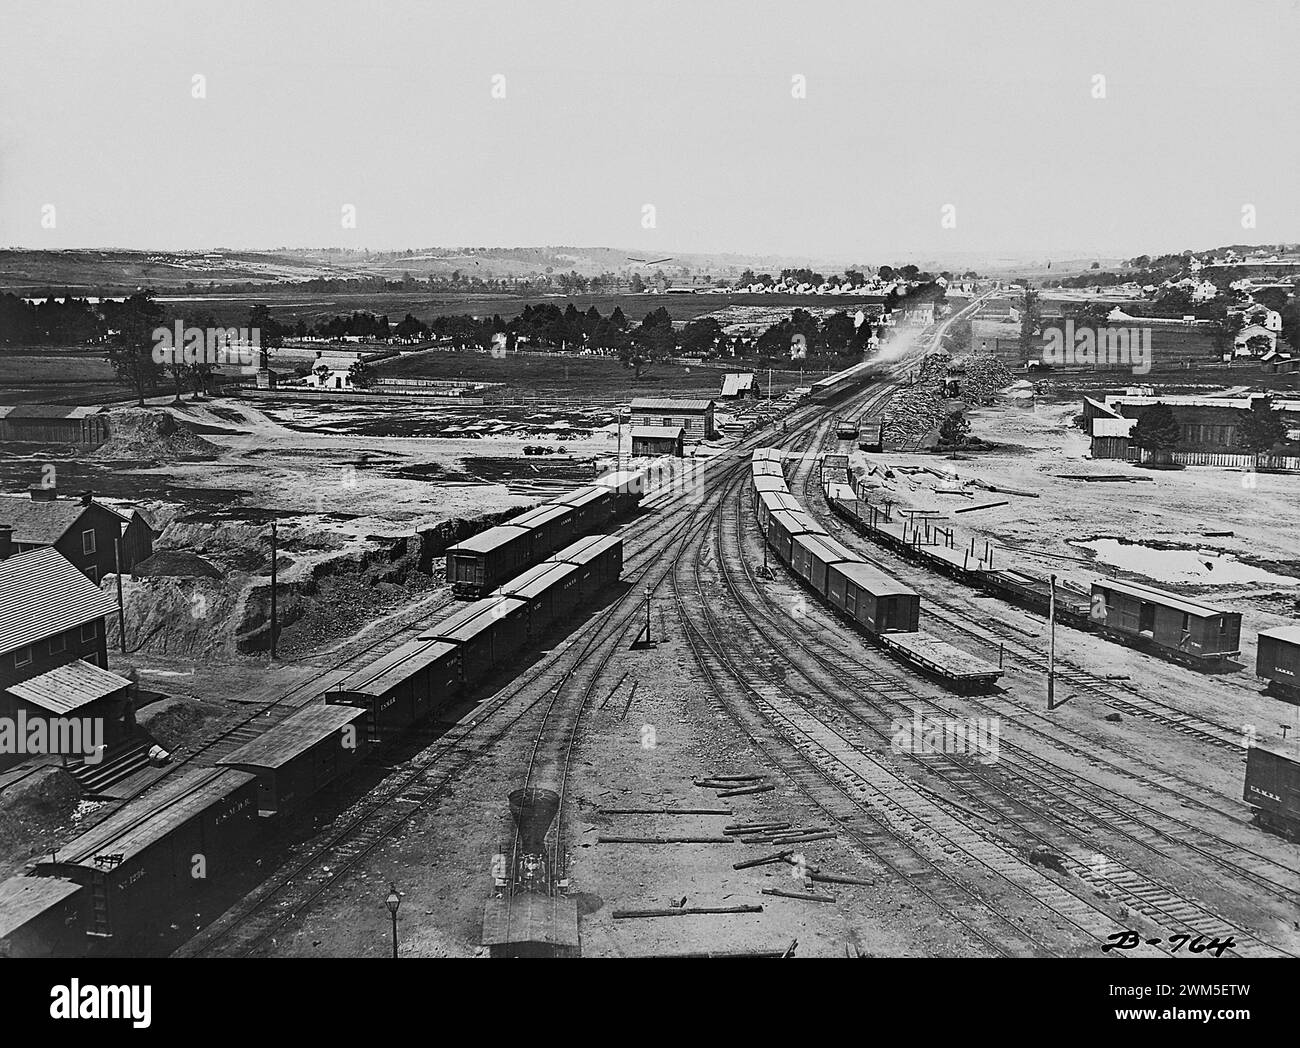 Gare de triage - photo de Mathew Benjamin Brady, C 1860 Banque D'Images